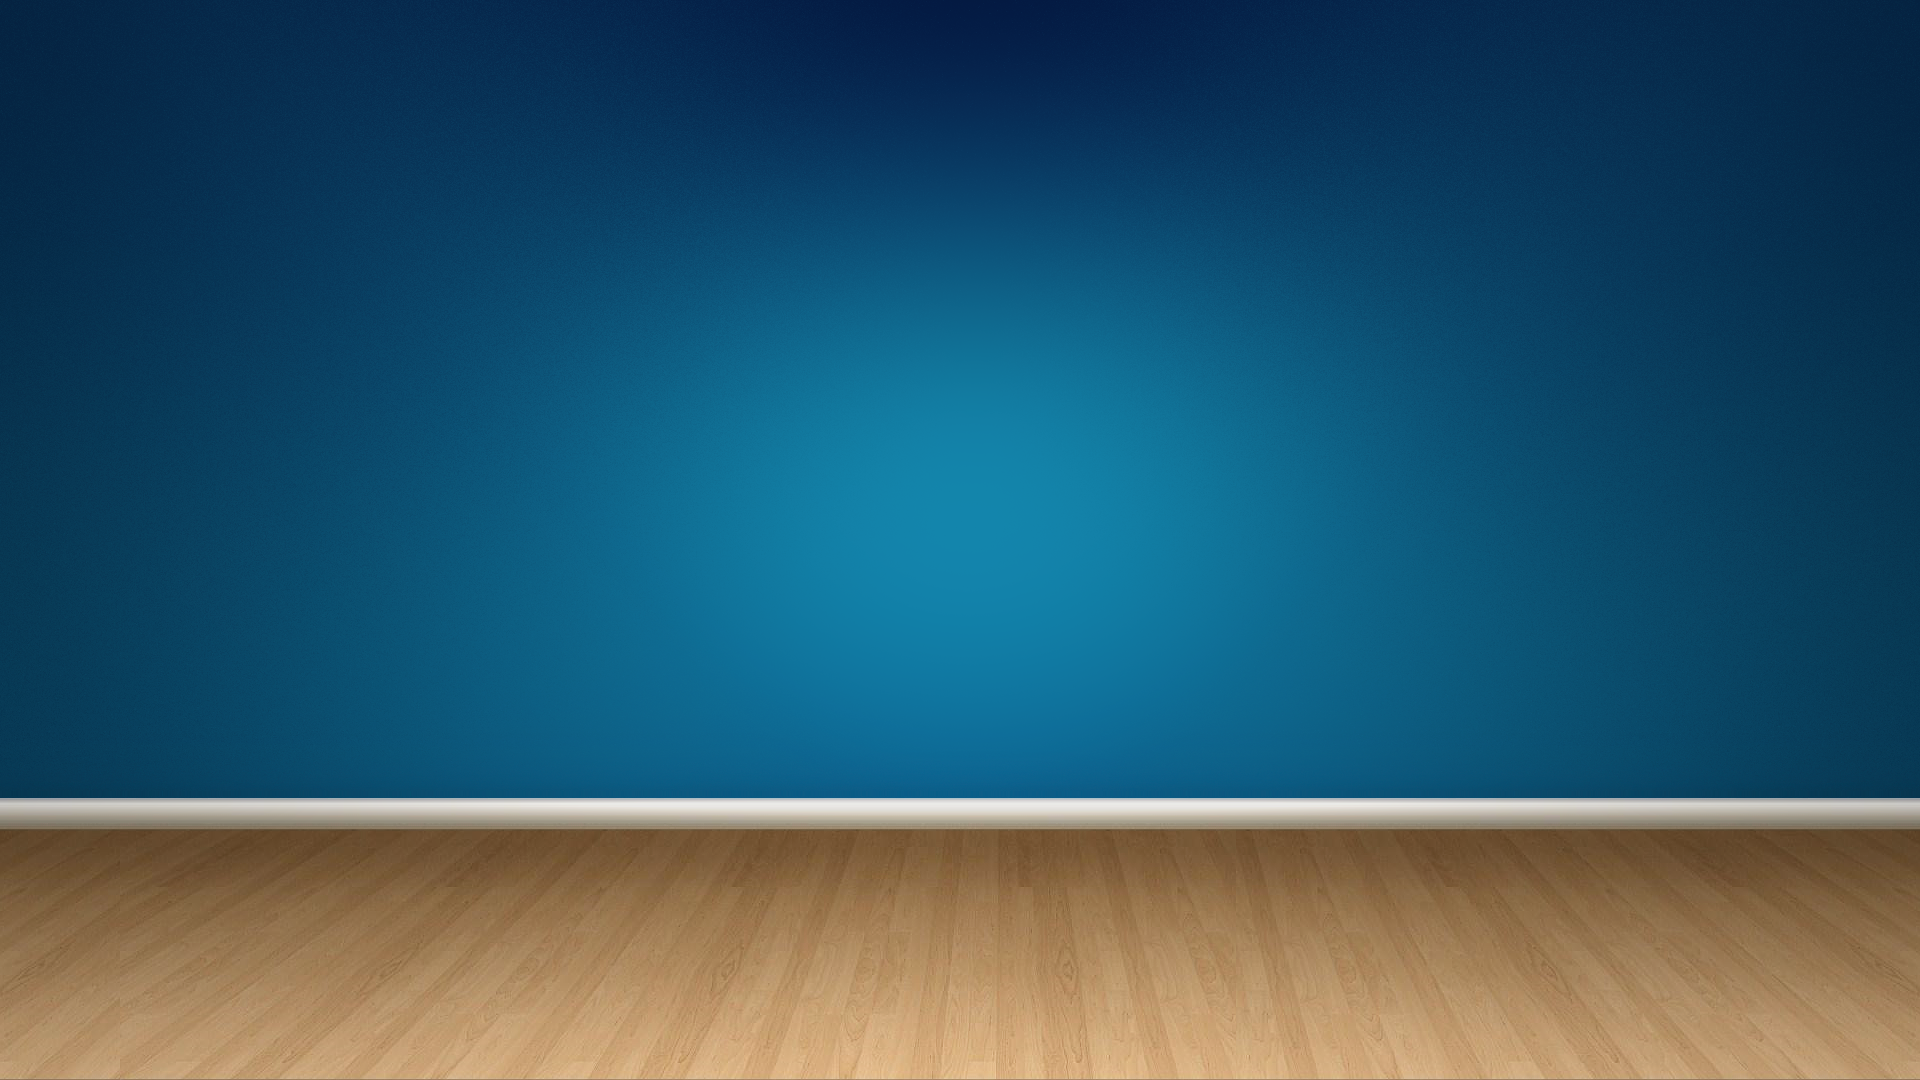 General 1920x1080 wall minimalism CGI blue background digital art wooden surface